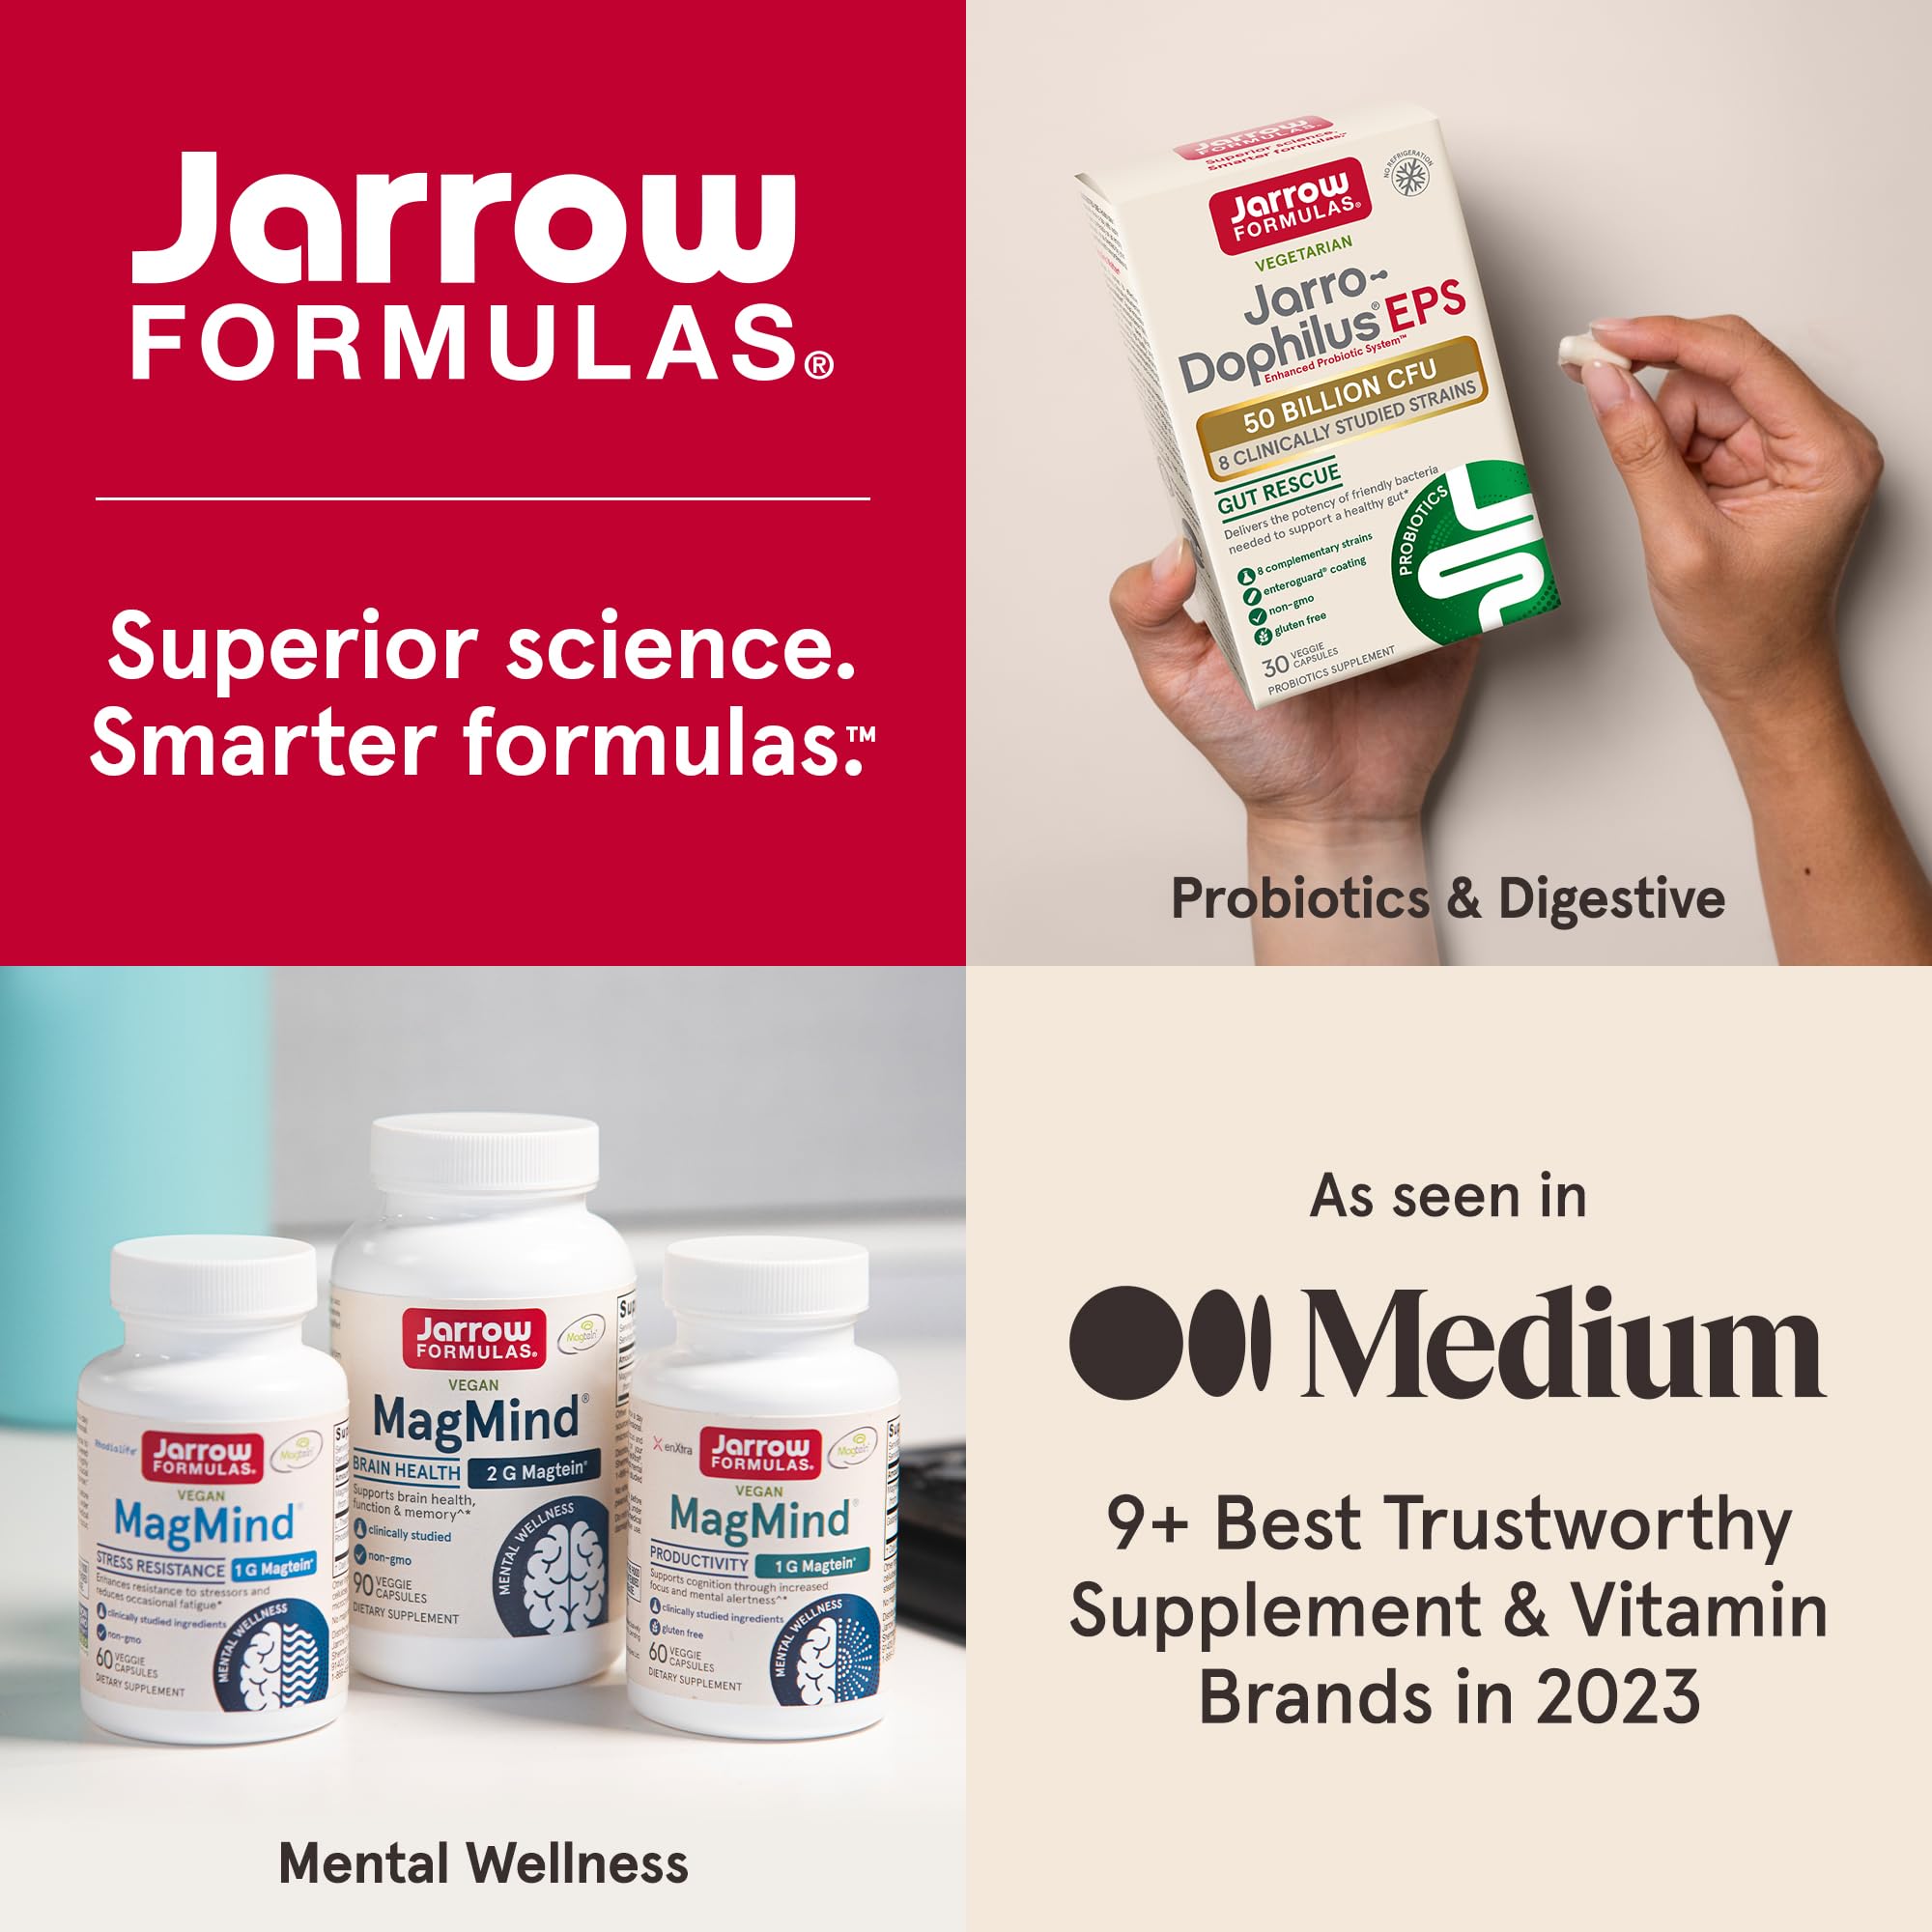 Jarrow Formulas BoneUp Three Per Day - 90 Capsules - 30 Servings - For Bone Support & Skeletal Nutrition - Includes Naturally Derived Vitamin D3, K2 (as MK-7) & 1000 mg Calcium - Gluten Free - Non-GMO